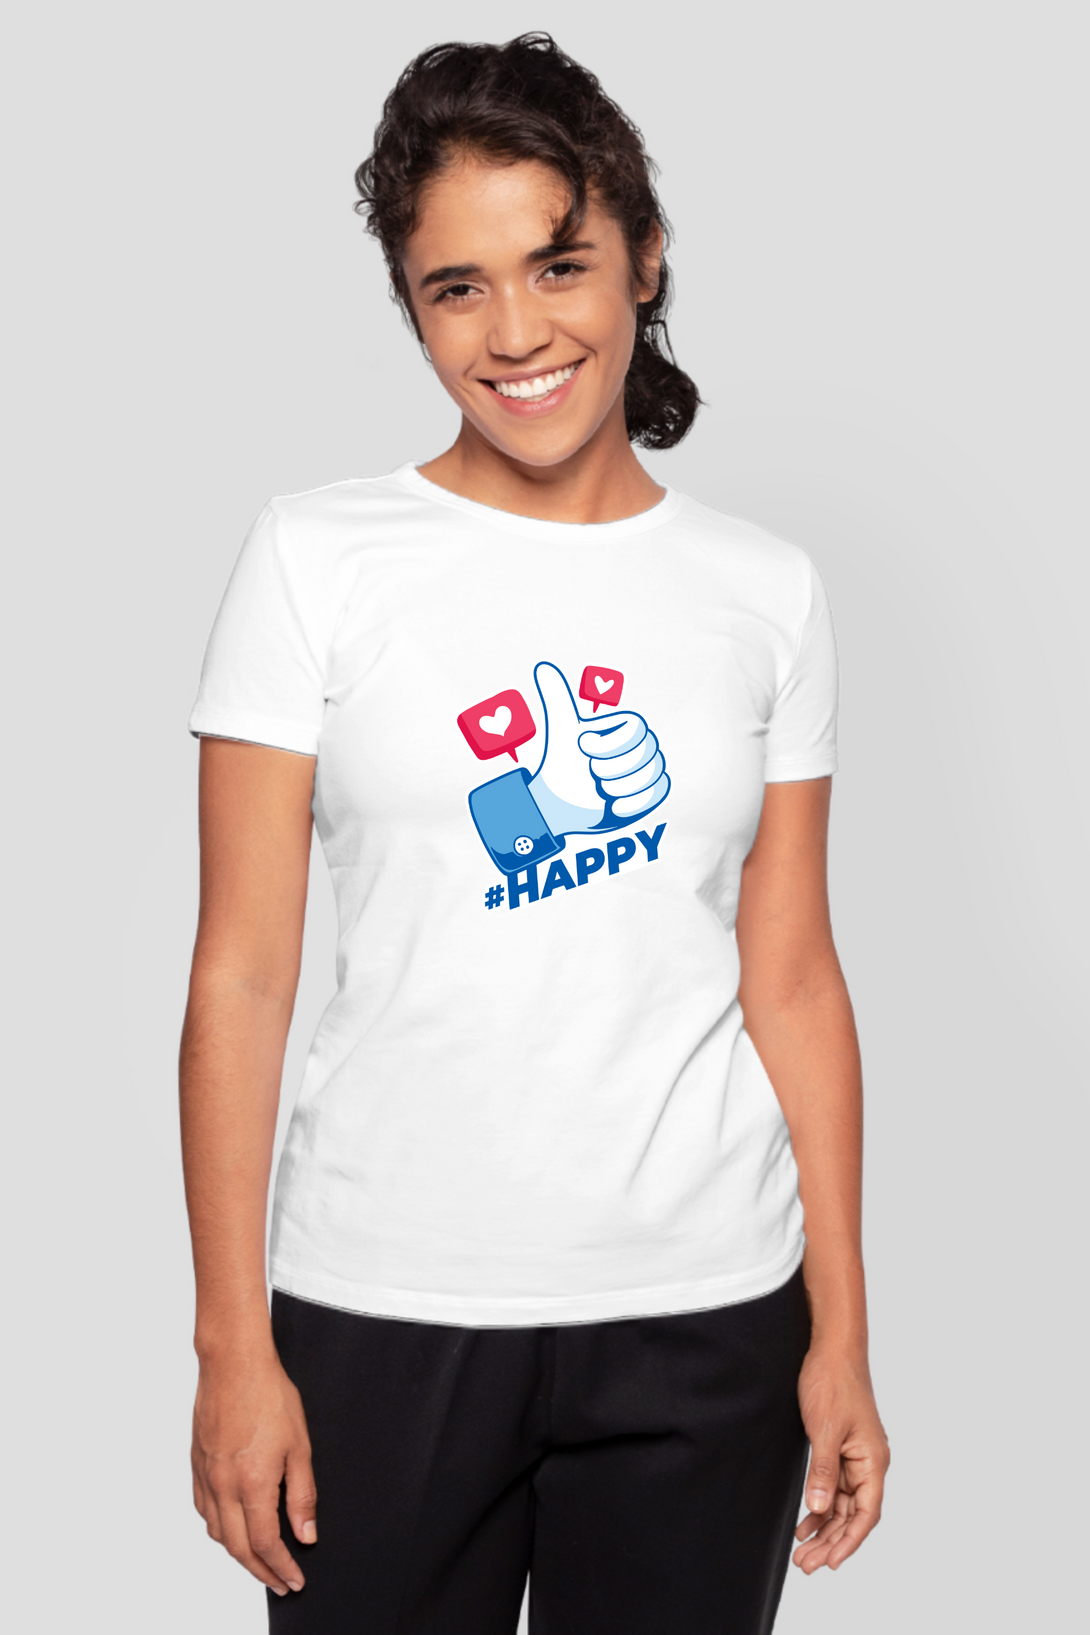 Like Printed T-Shirt For Women - WowWaves - 10